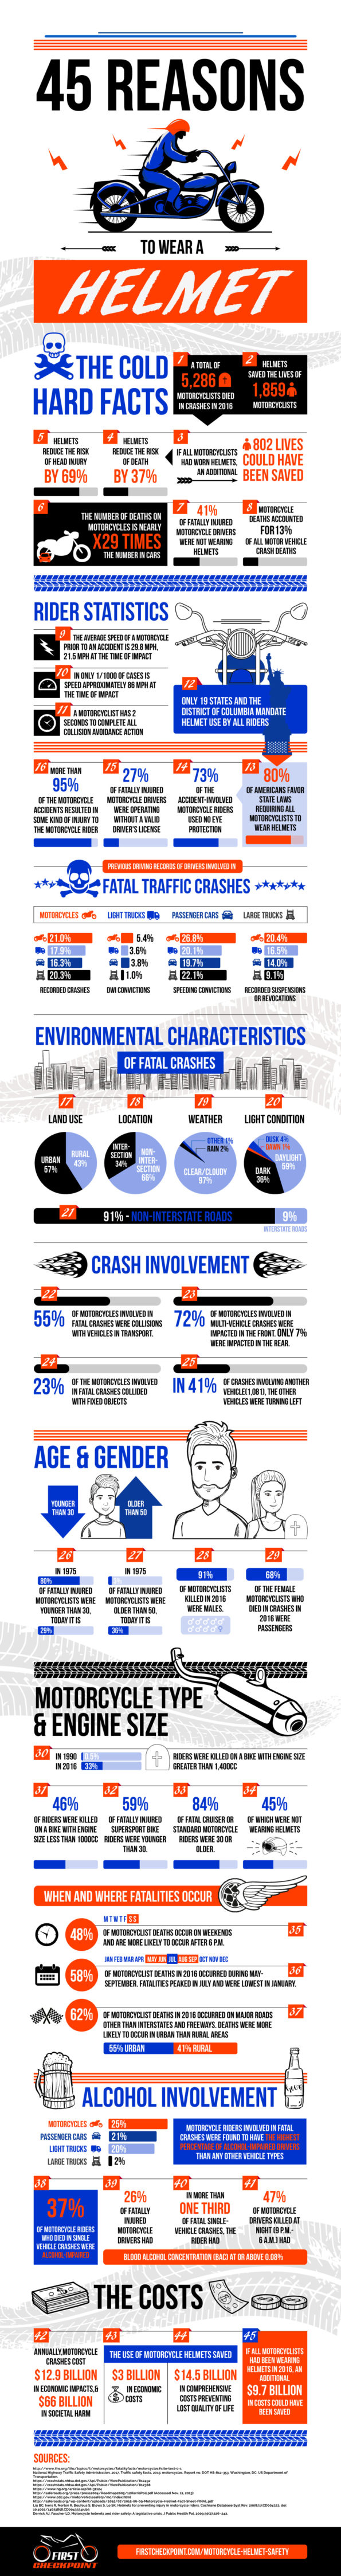 Motorcycle Accident Statistics & Helmet Safety